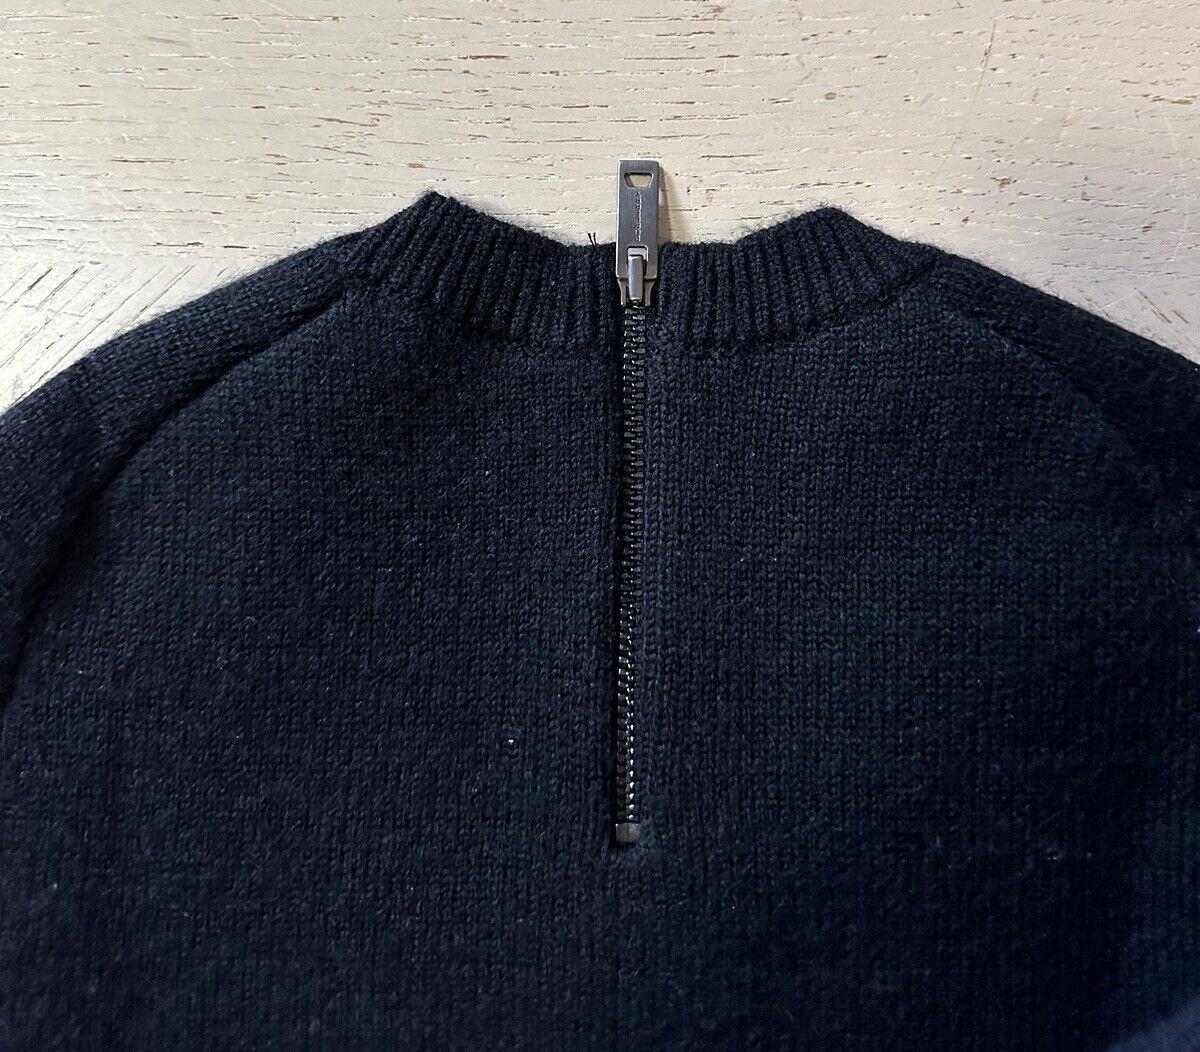 New Burberry Baby Girls Cashmere Blend Sweater Dress Black/Beige/Multi Size 18 M